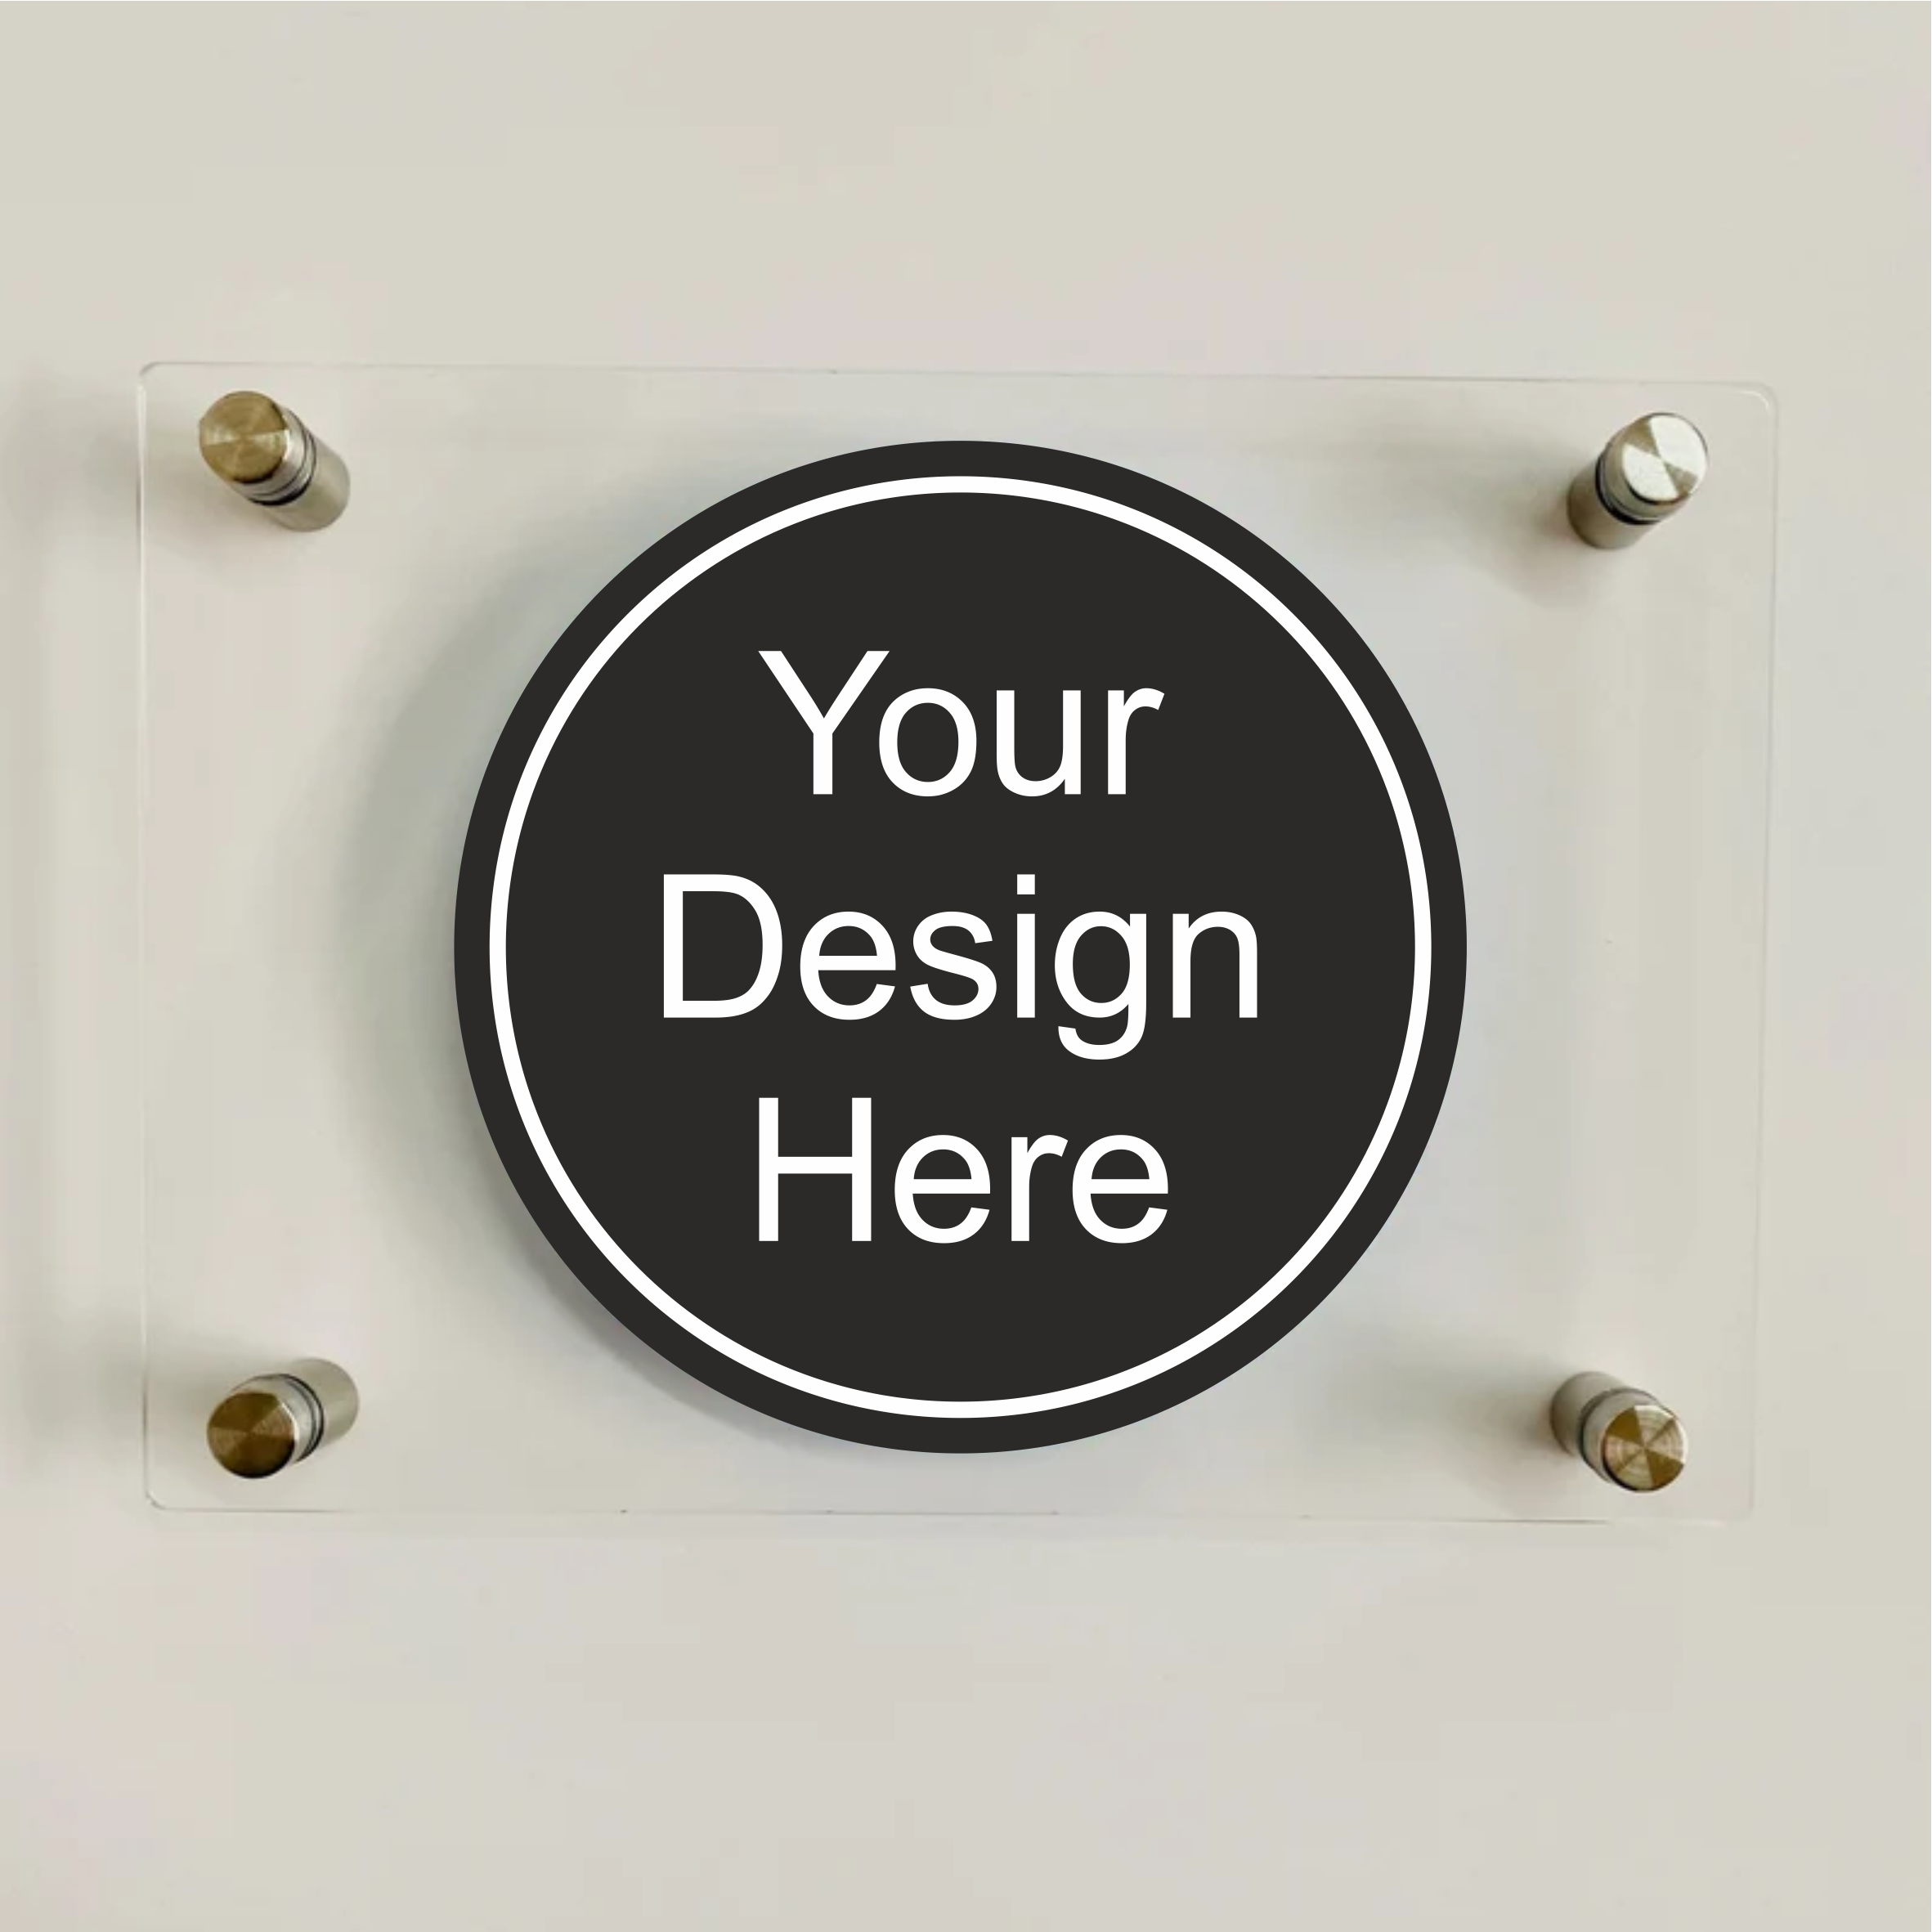 Acrylic Custom-made Business Signs